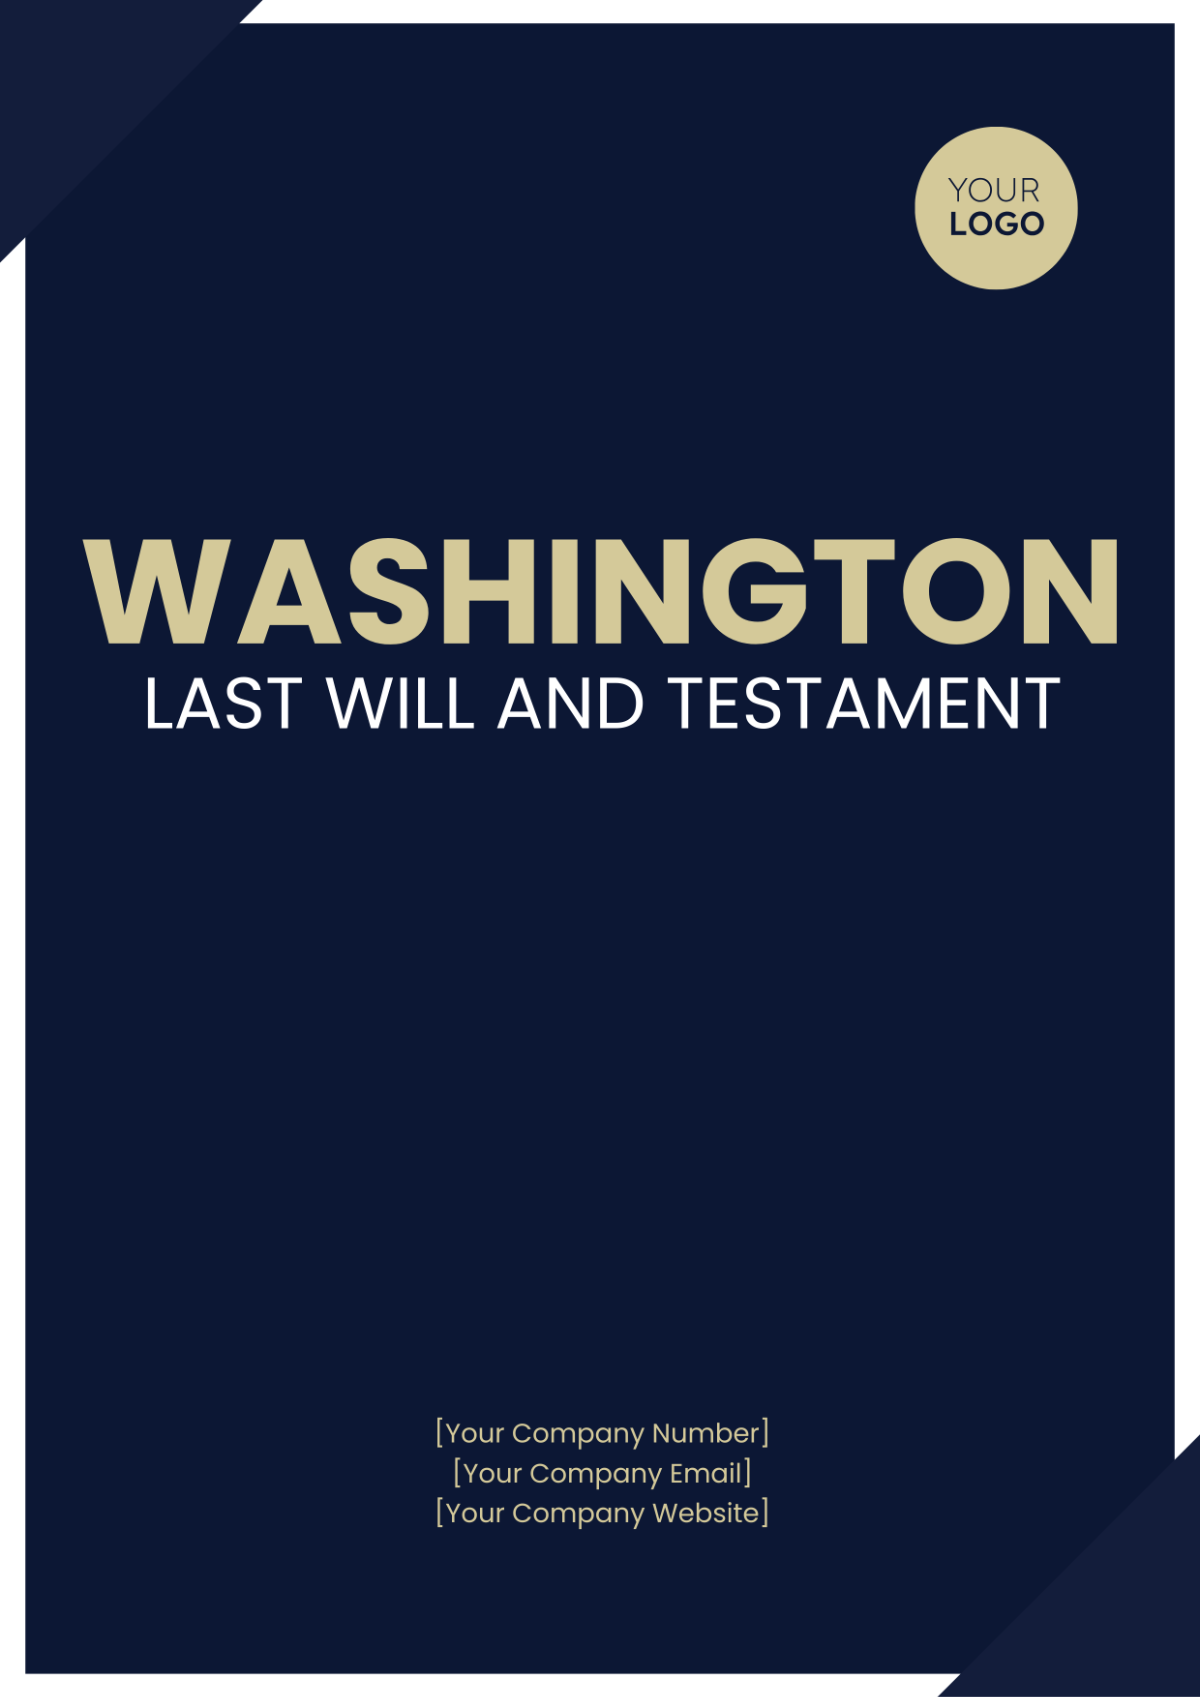 Washington Last Will and Testament Template